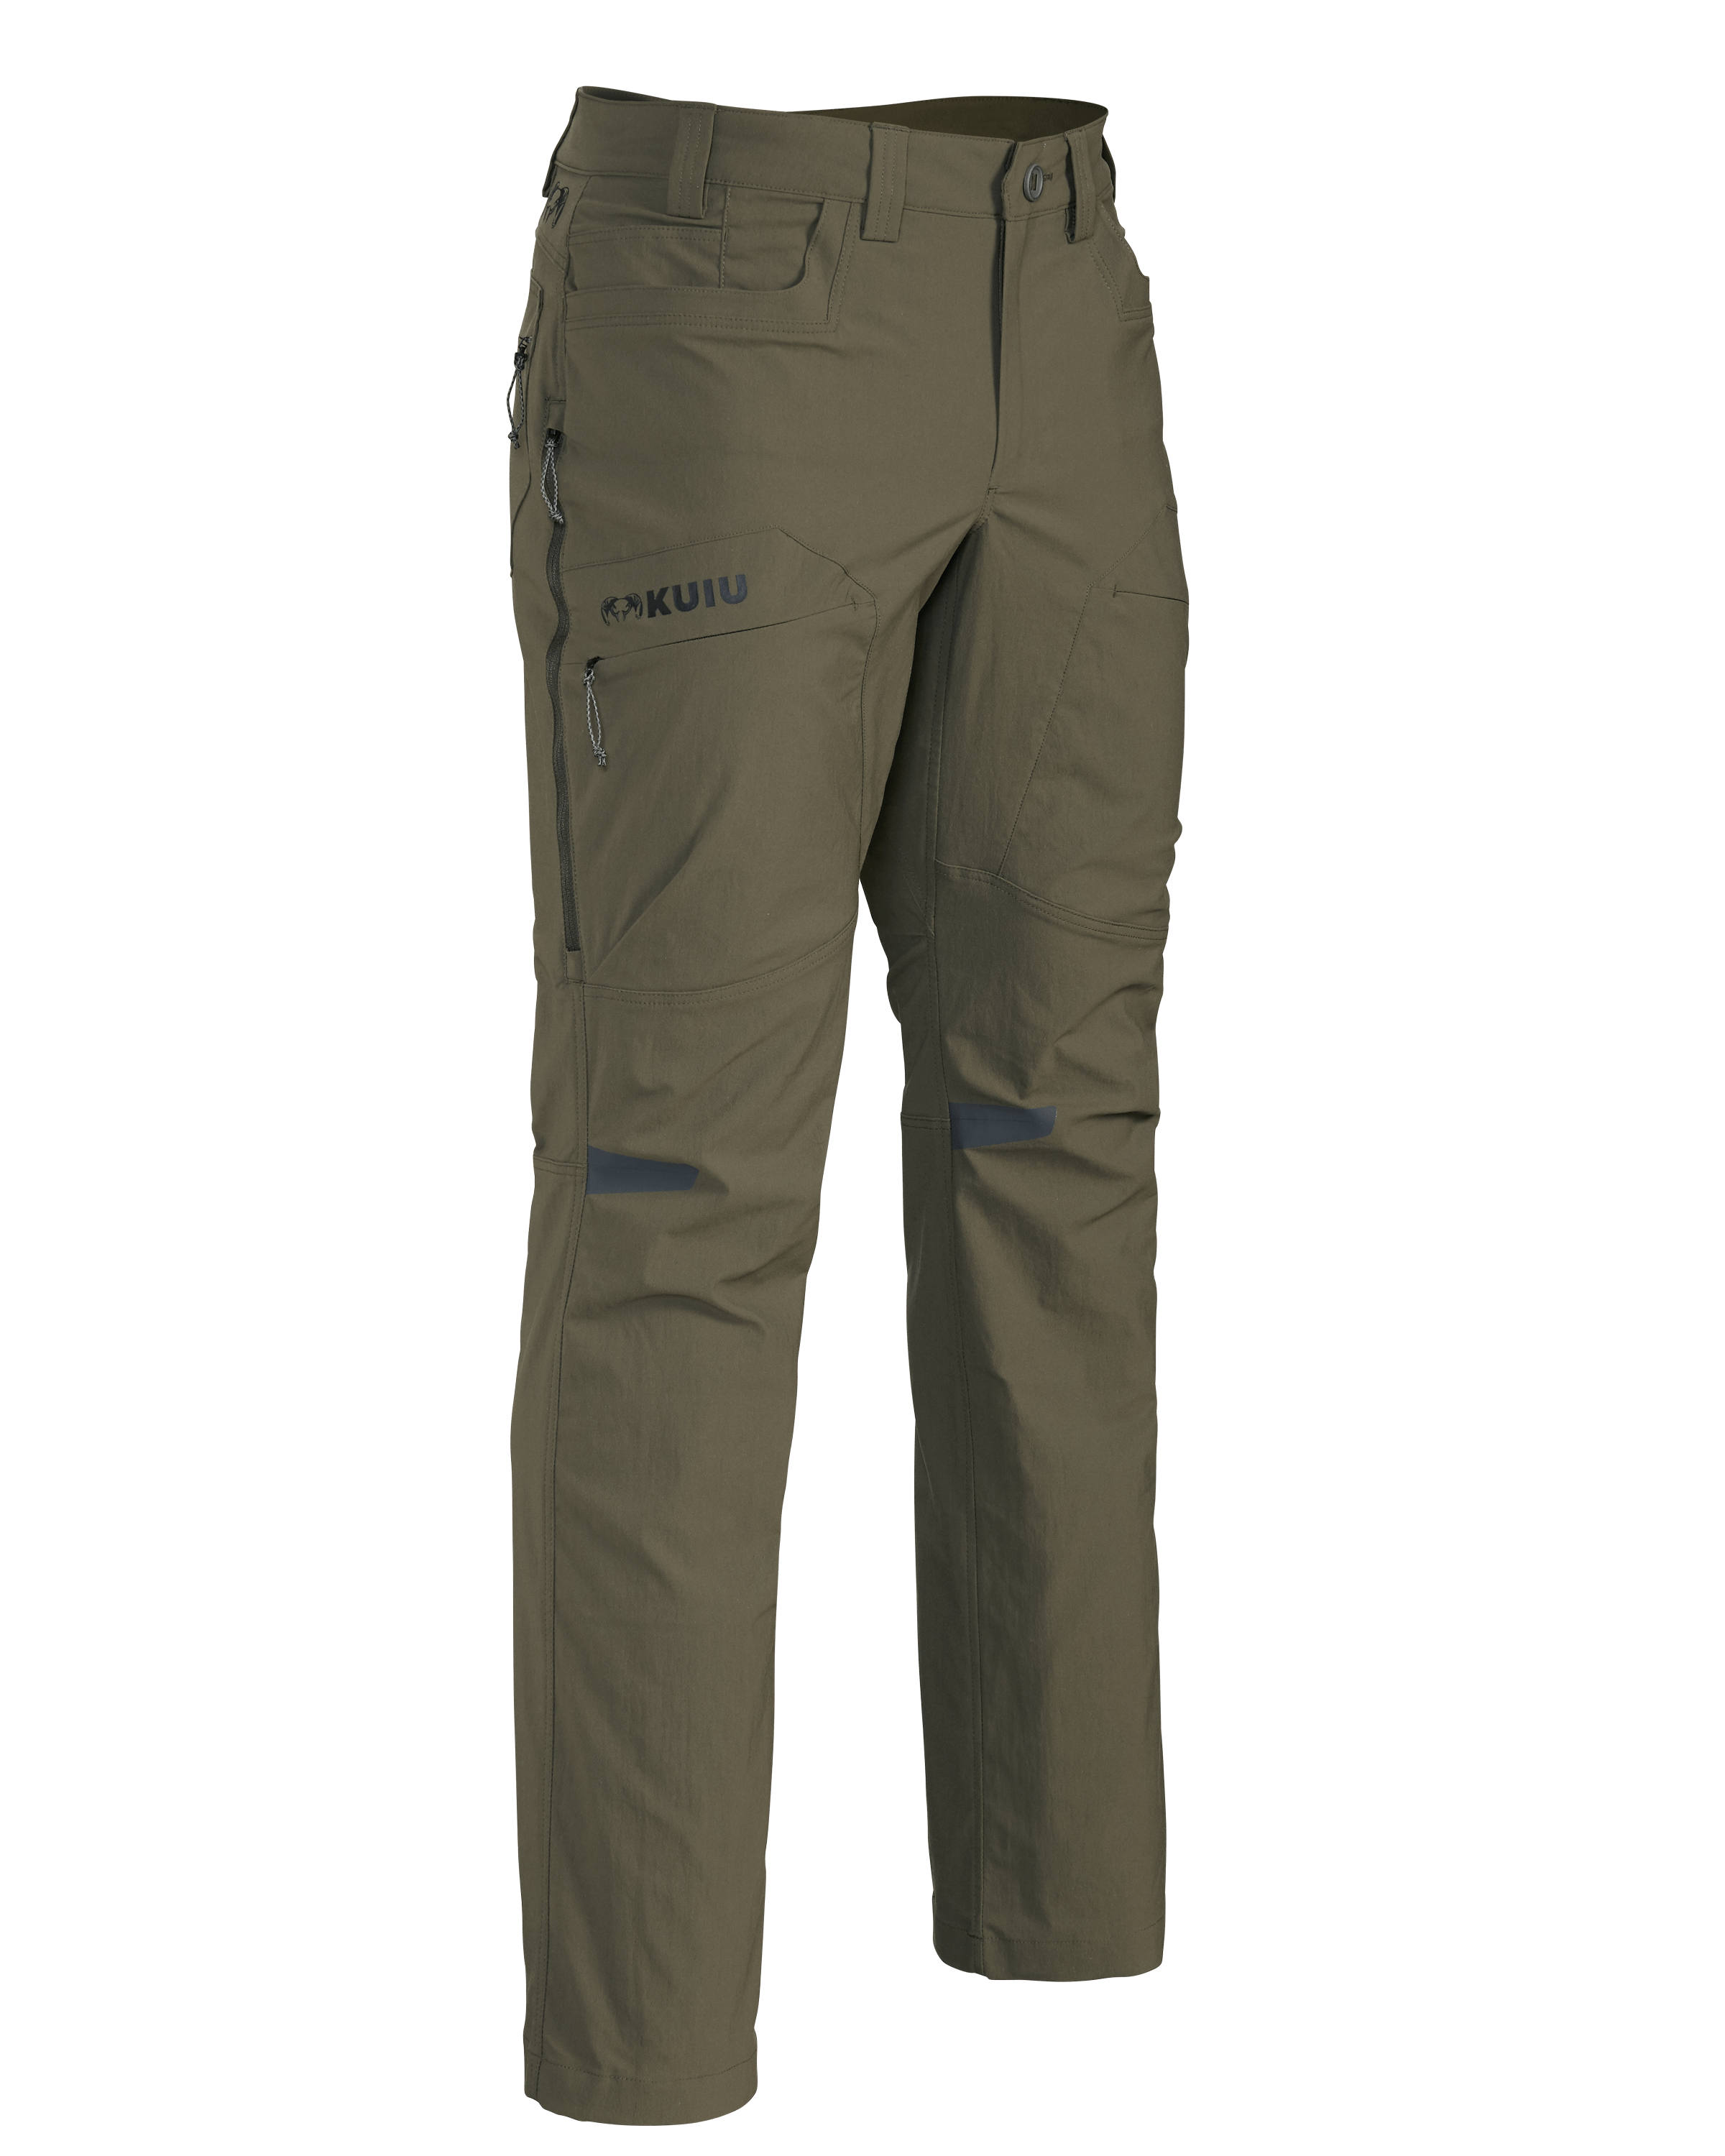 Kutana Stretch Woven Pants with Cargo Pockets